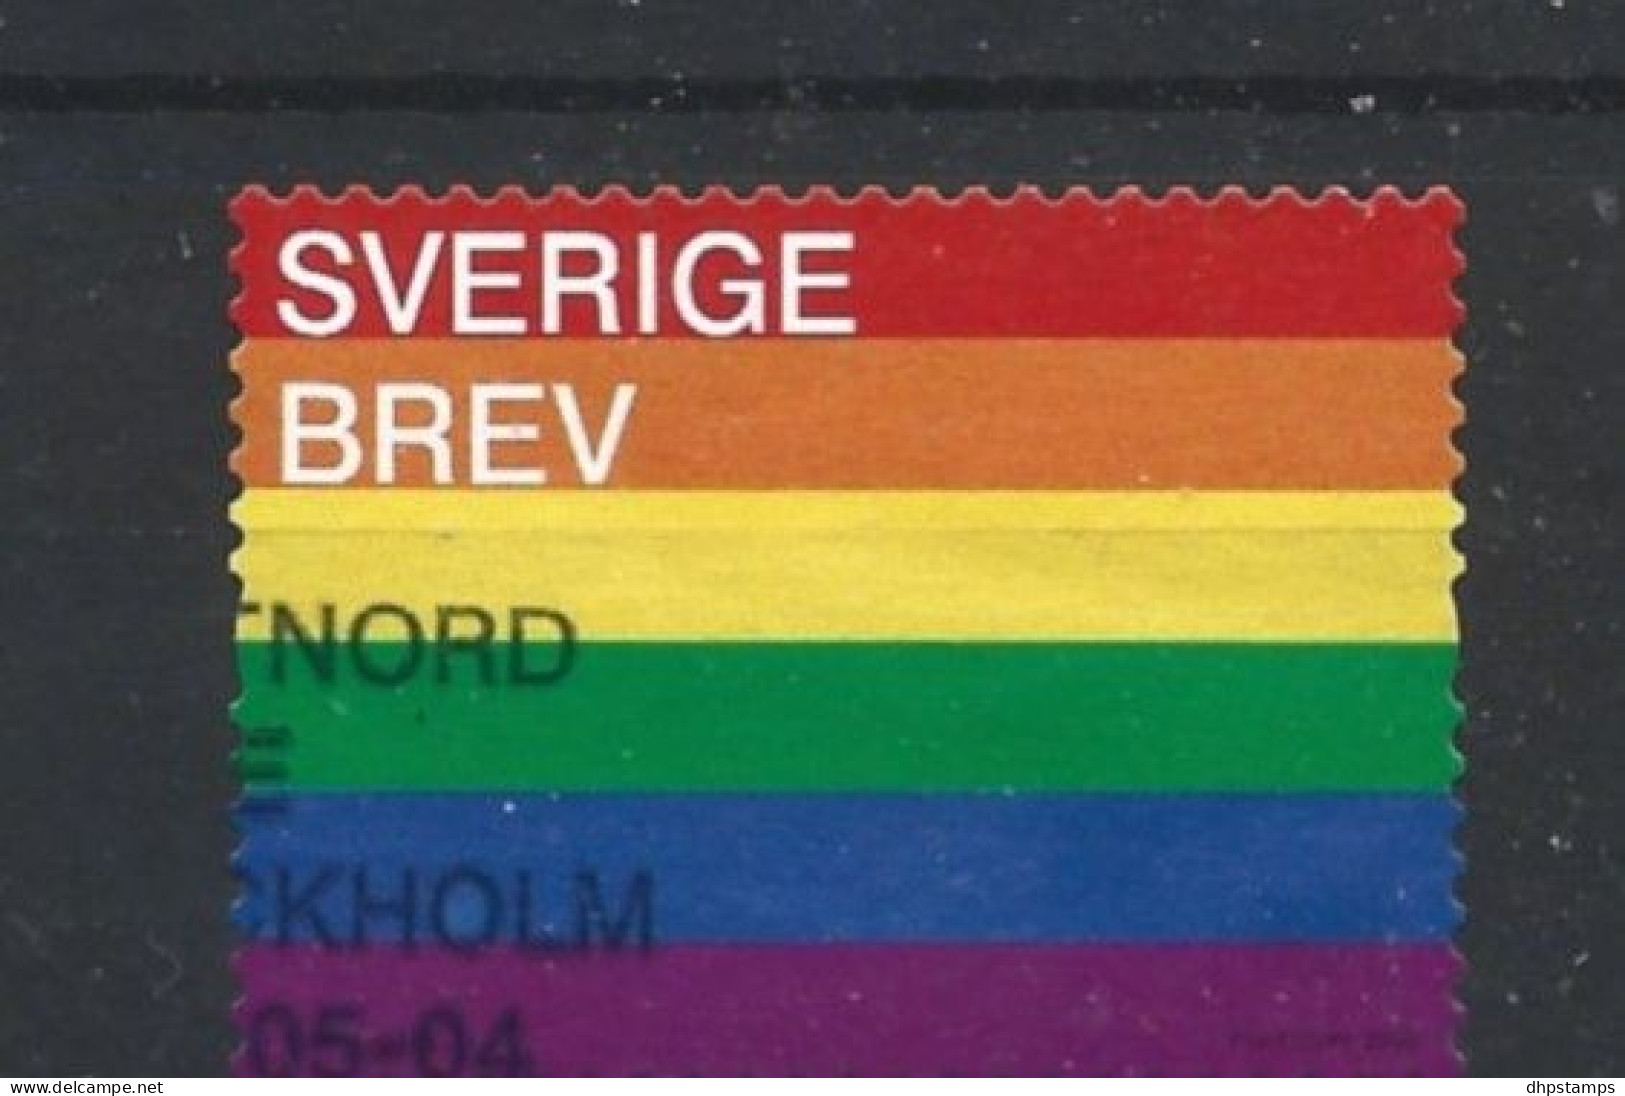 Sweden 2016 Flag Y.T. 3100 (0) - Used Stamps